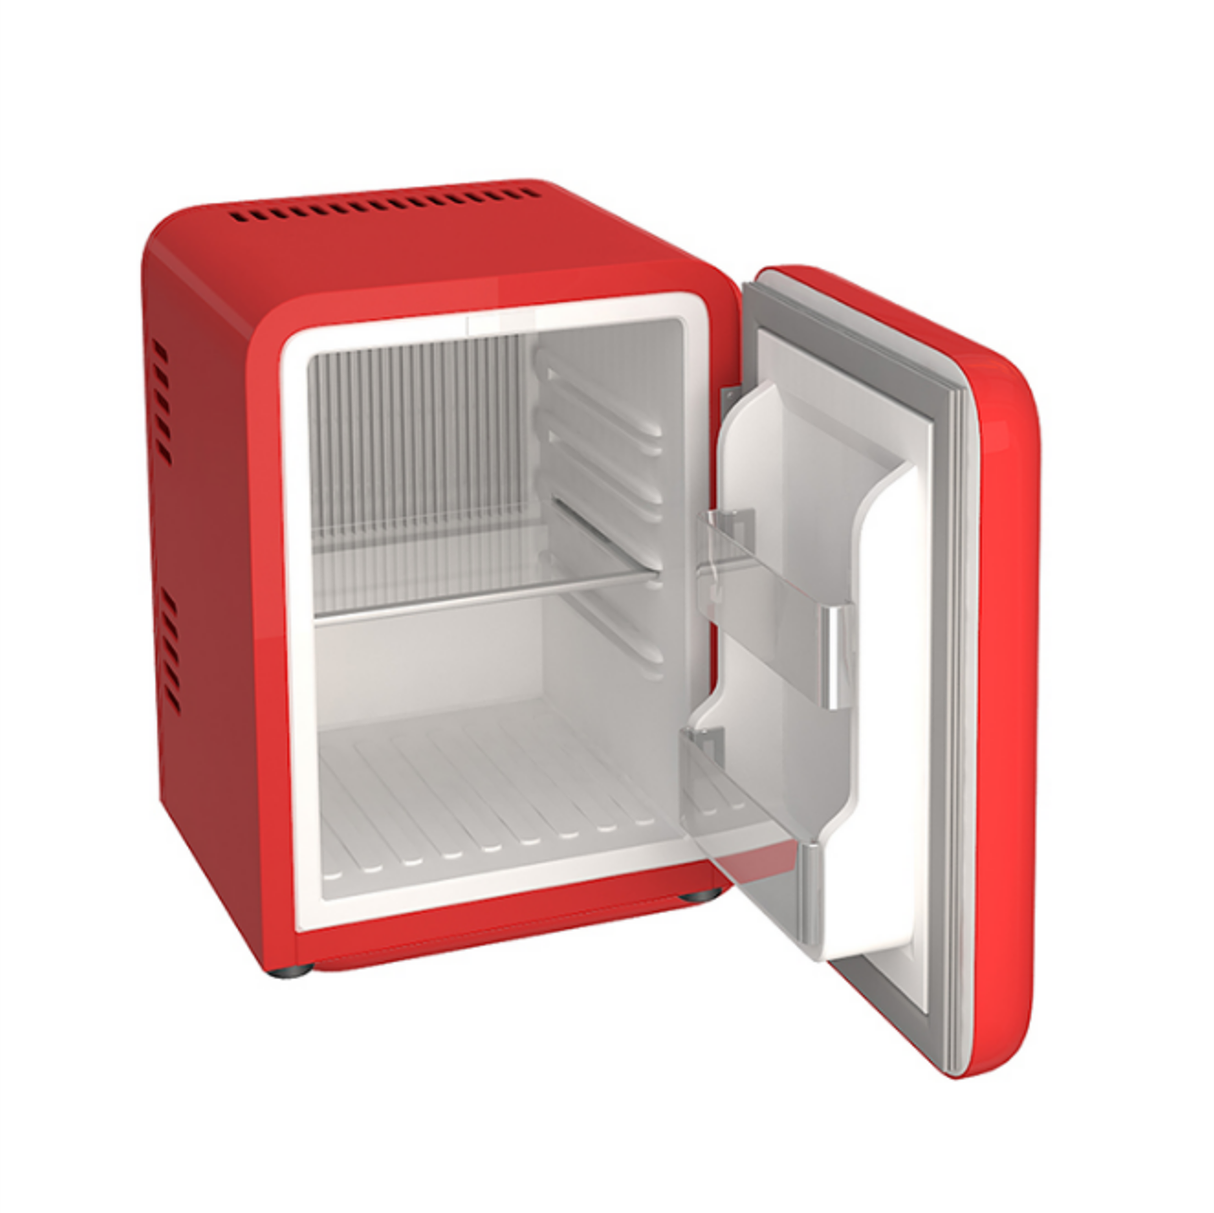 30L Retro Absorption Refrigerator